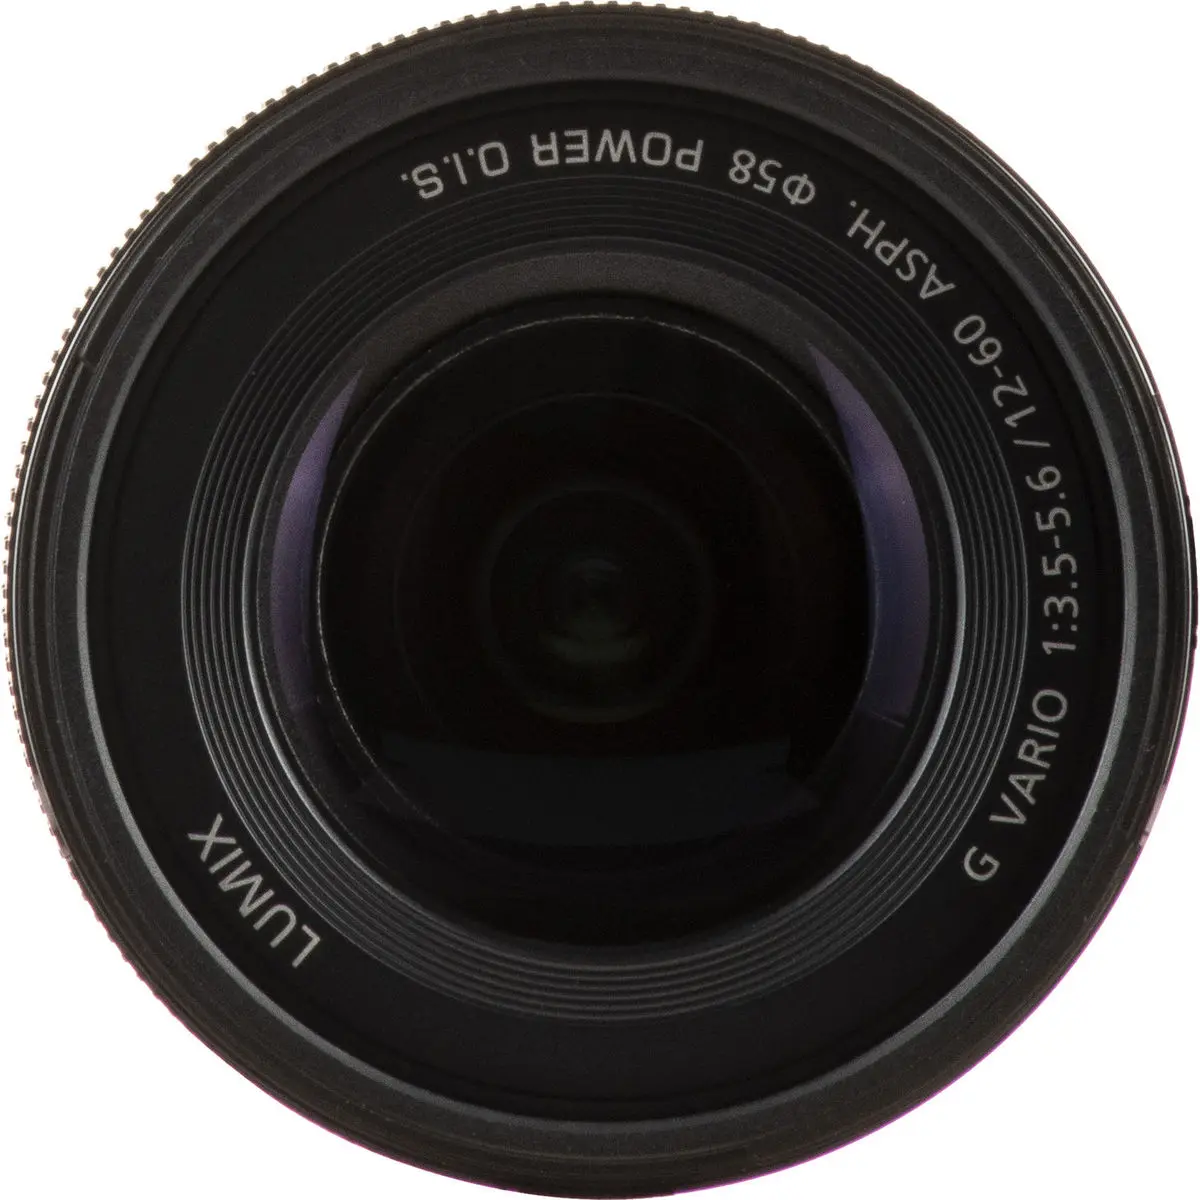 5. Panasonic Lumix G 12-60mm f/3.5-5.6 Asph. OIS Lens